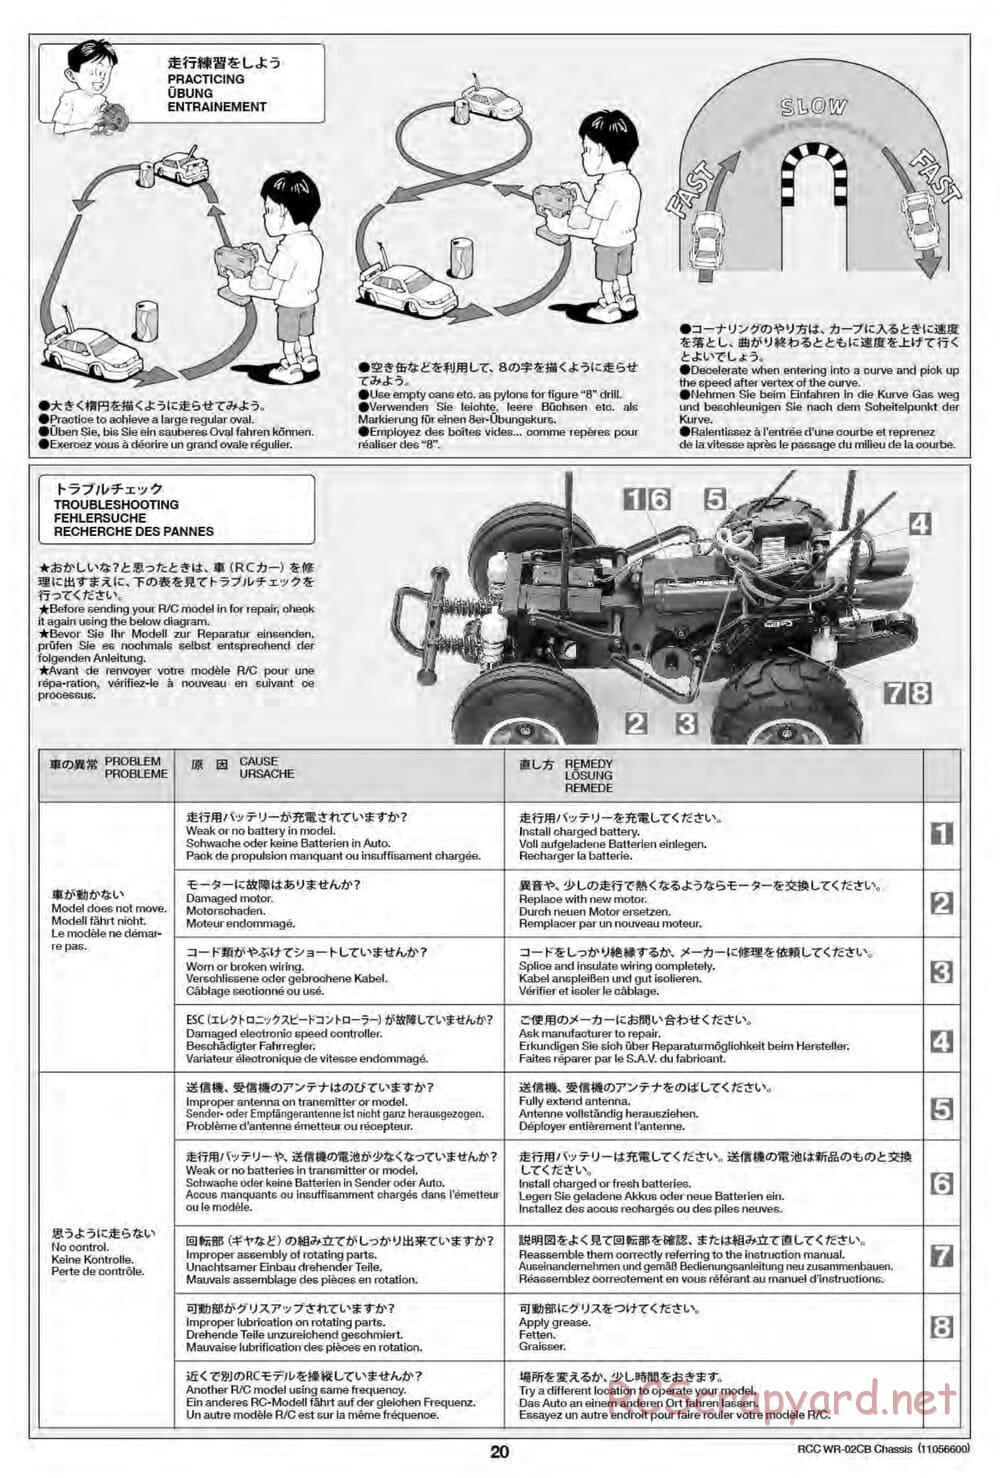 Tamiya - WR-02CB Chassis - Manual - Page 20